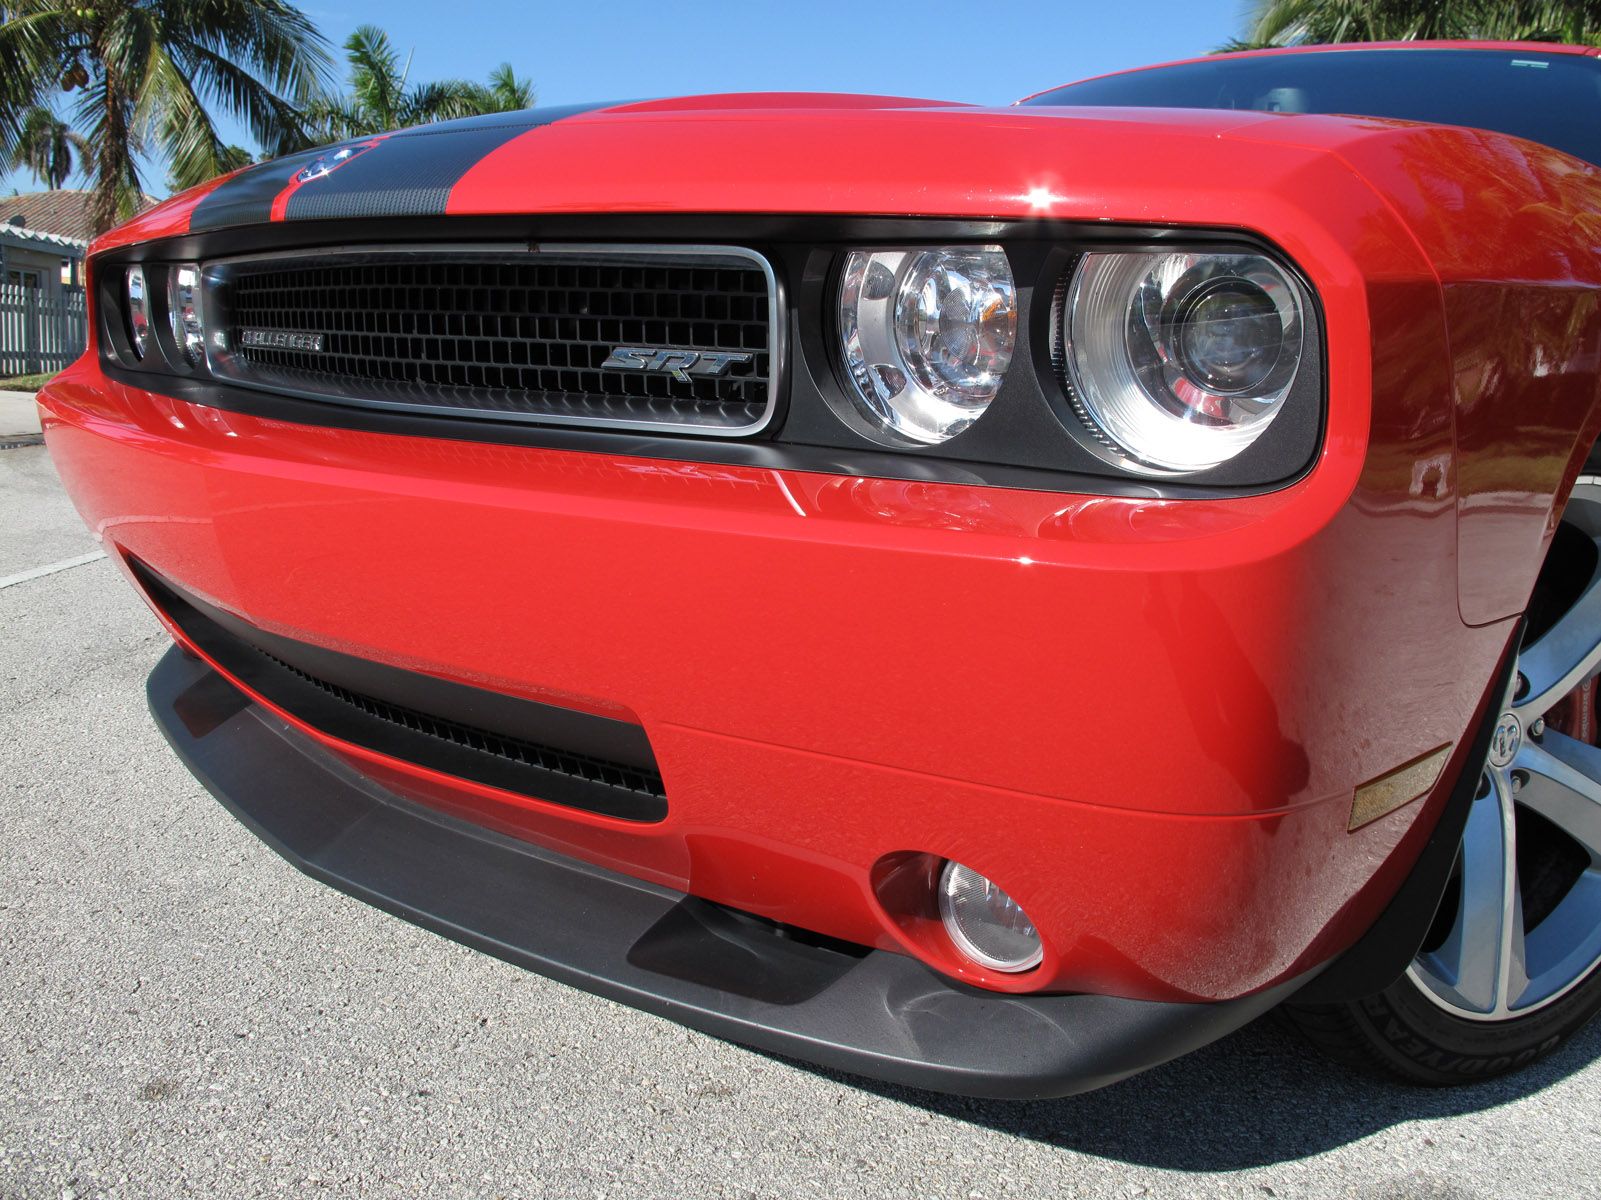 2009 Dodge Challenger SRT8 (part 2)